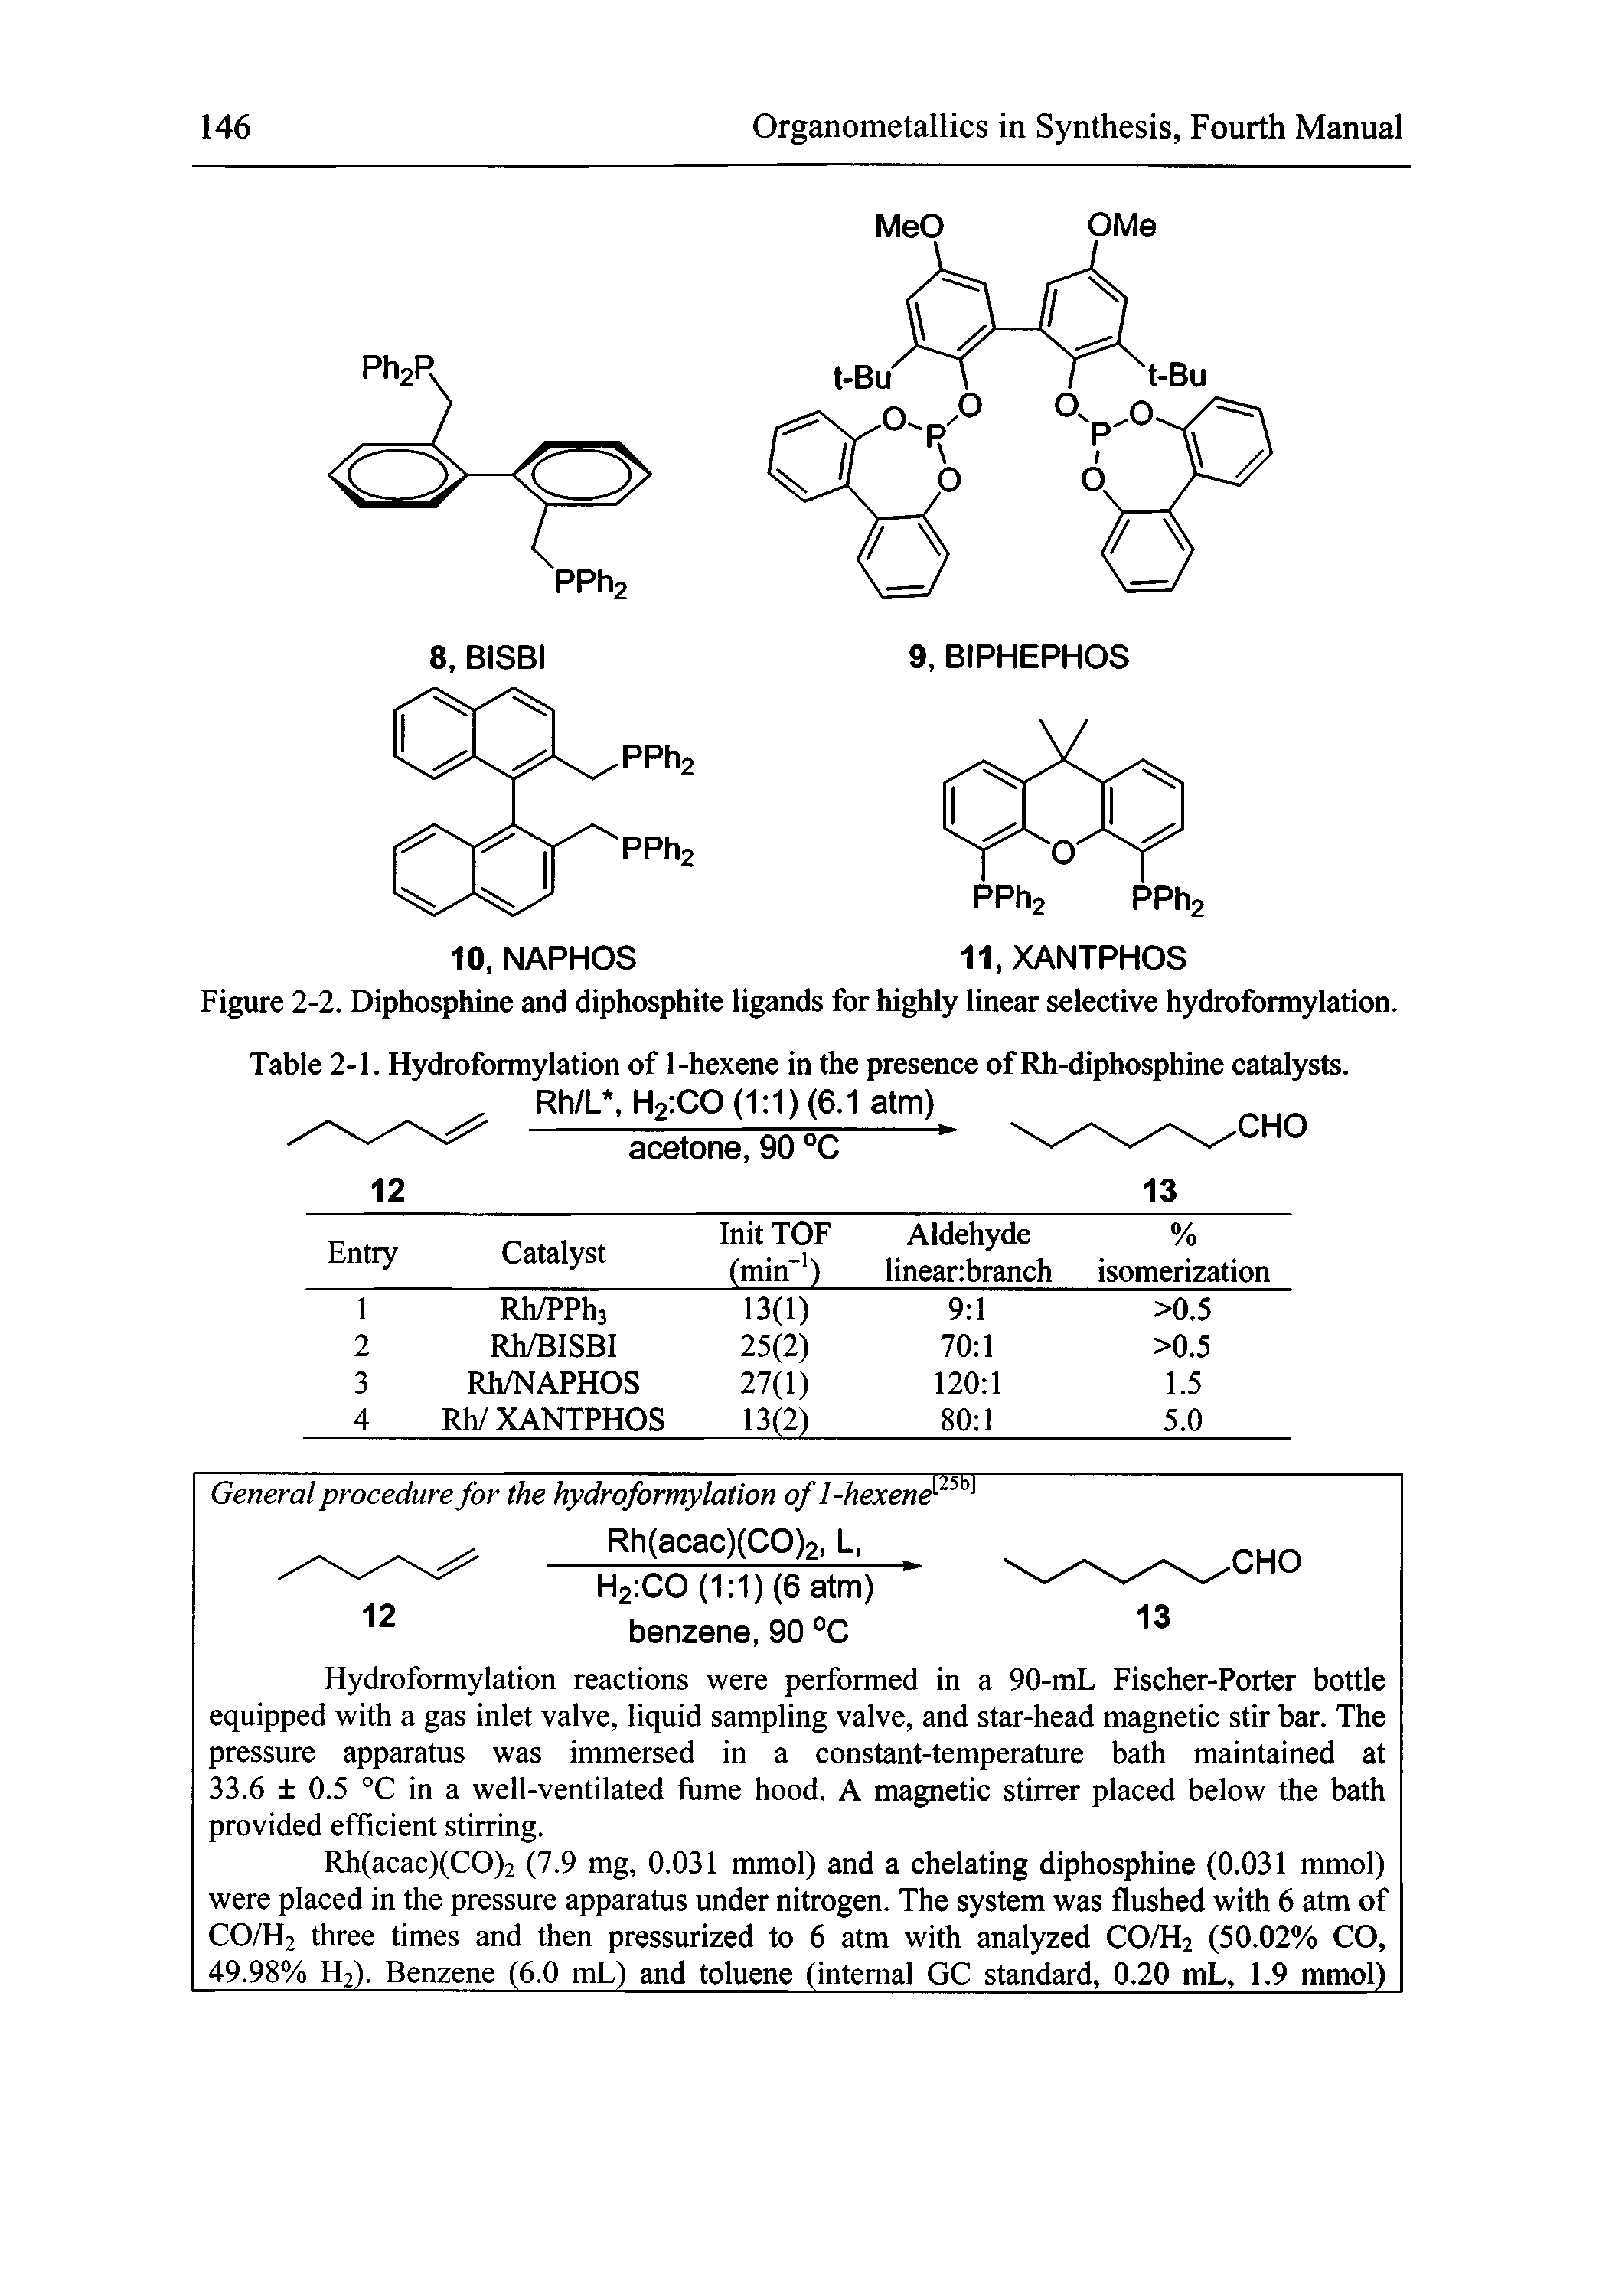 Figure 2-2. Diphosphine and diphosphite ligands for highly linear selective hydroformylation.